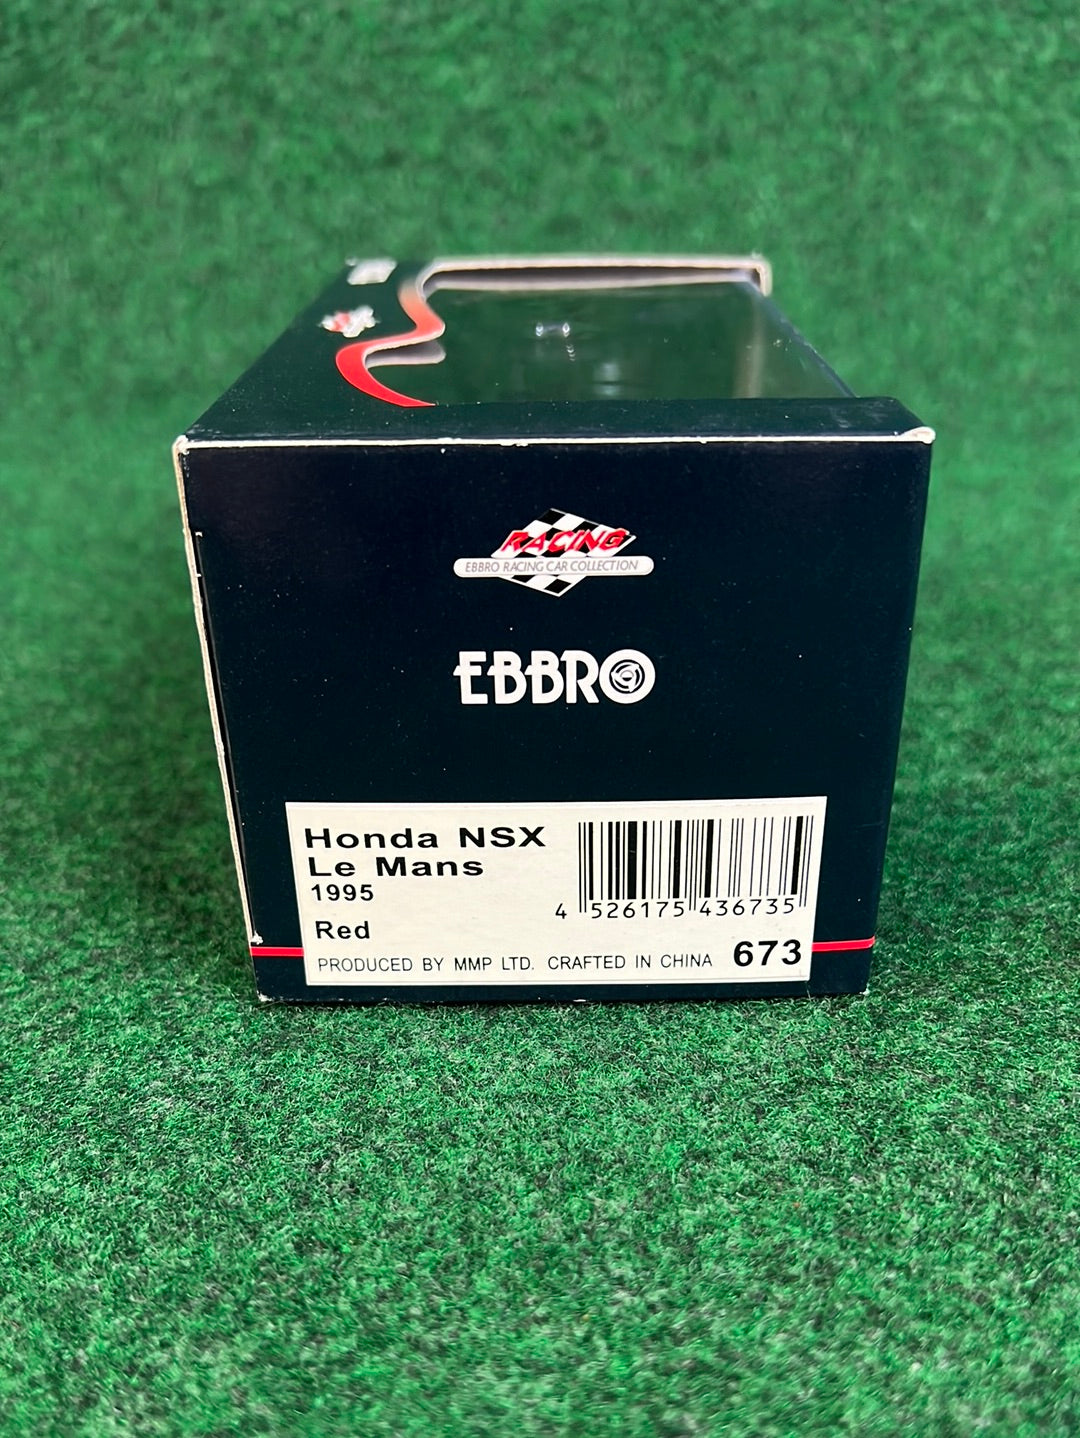 EBBRO Racing Collection 1995 Honda NSX LeMans 1/43 Diecast